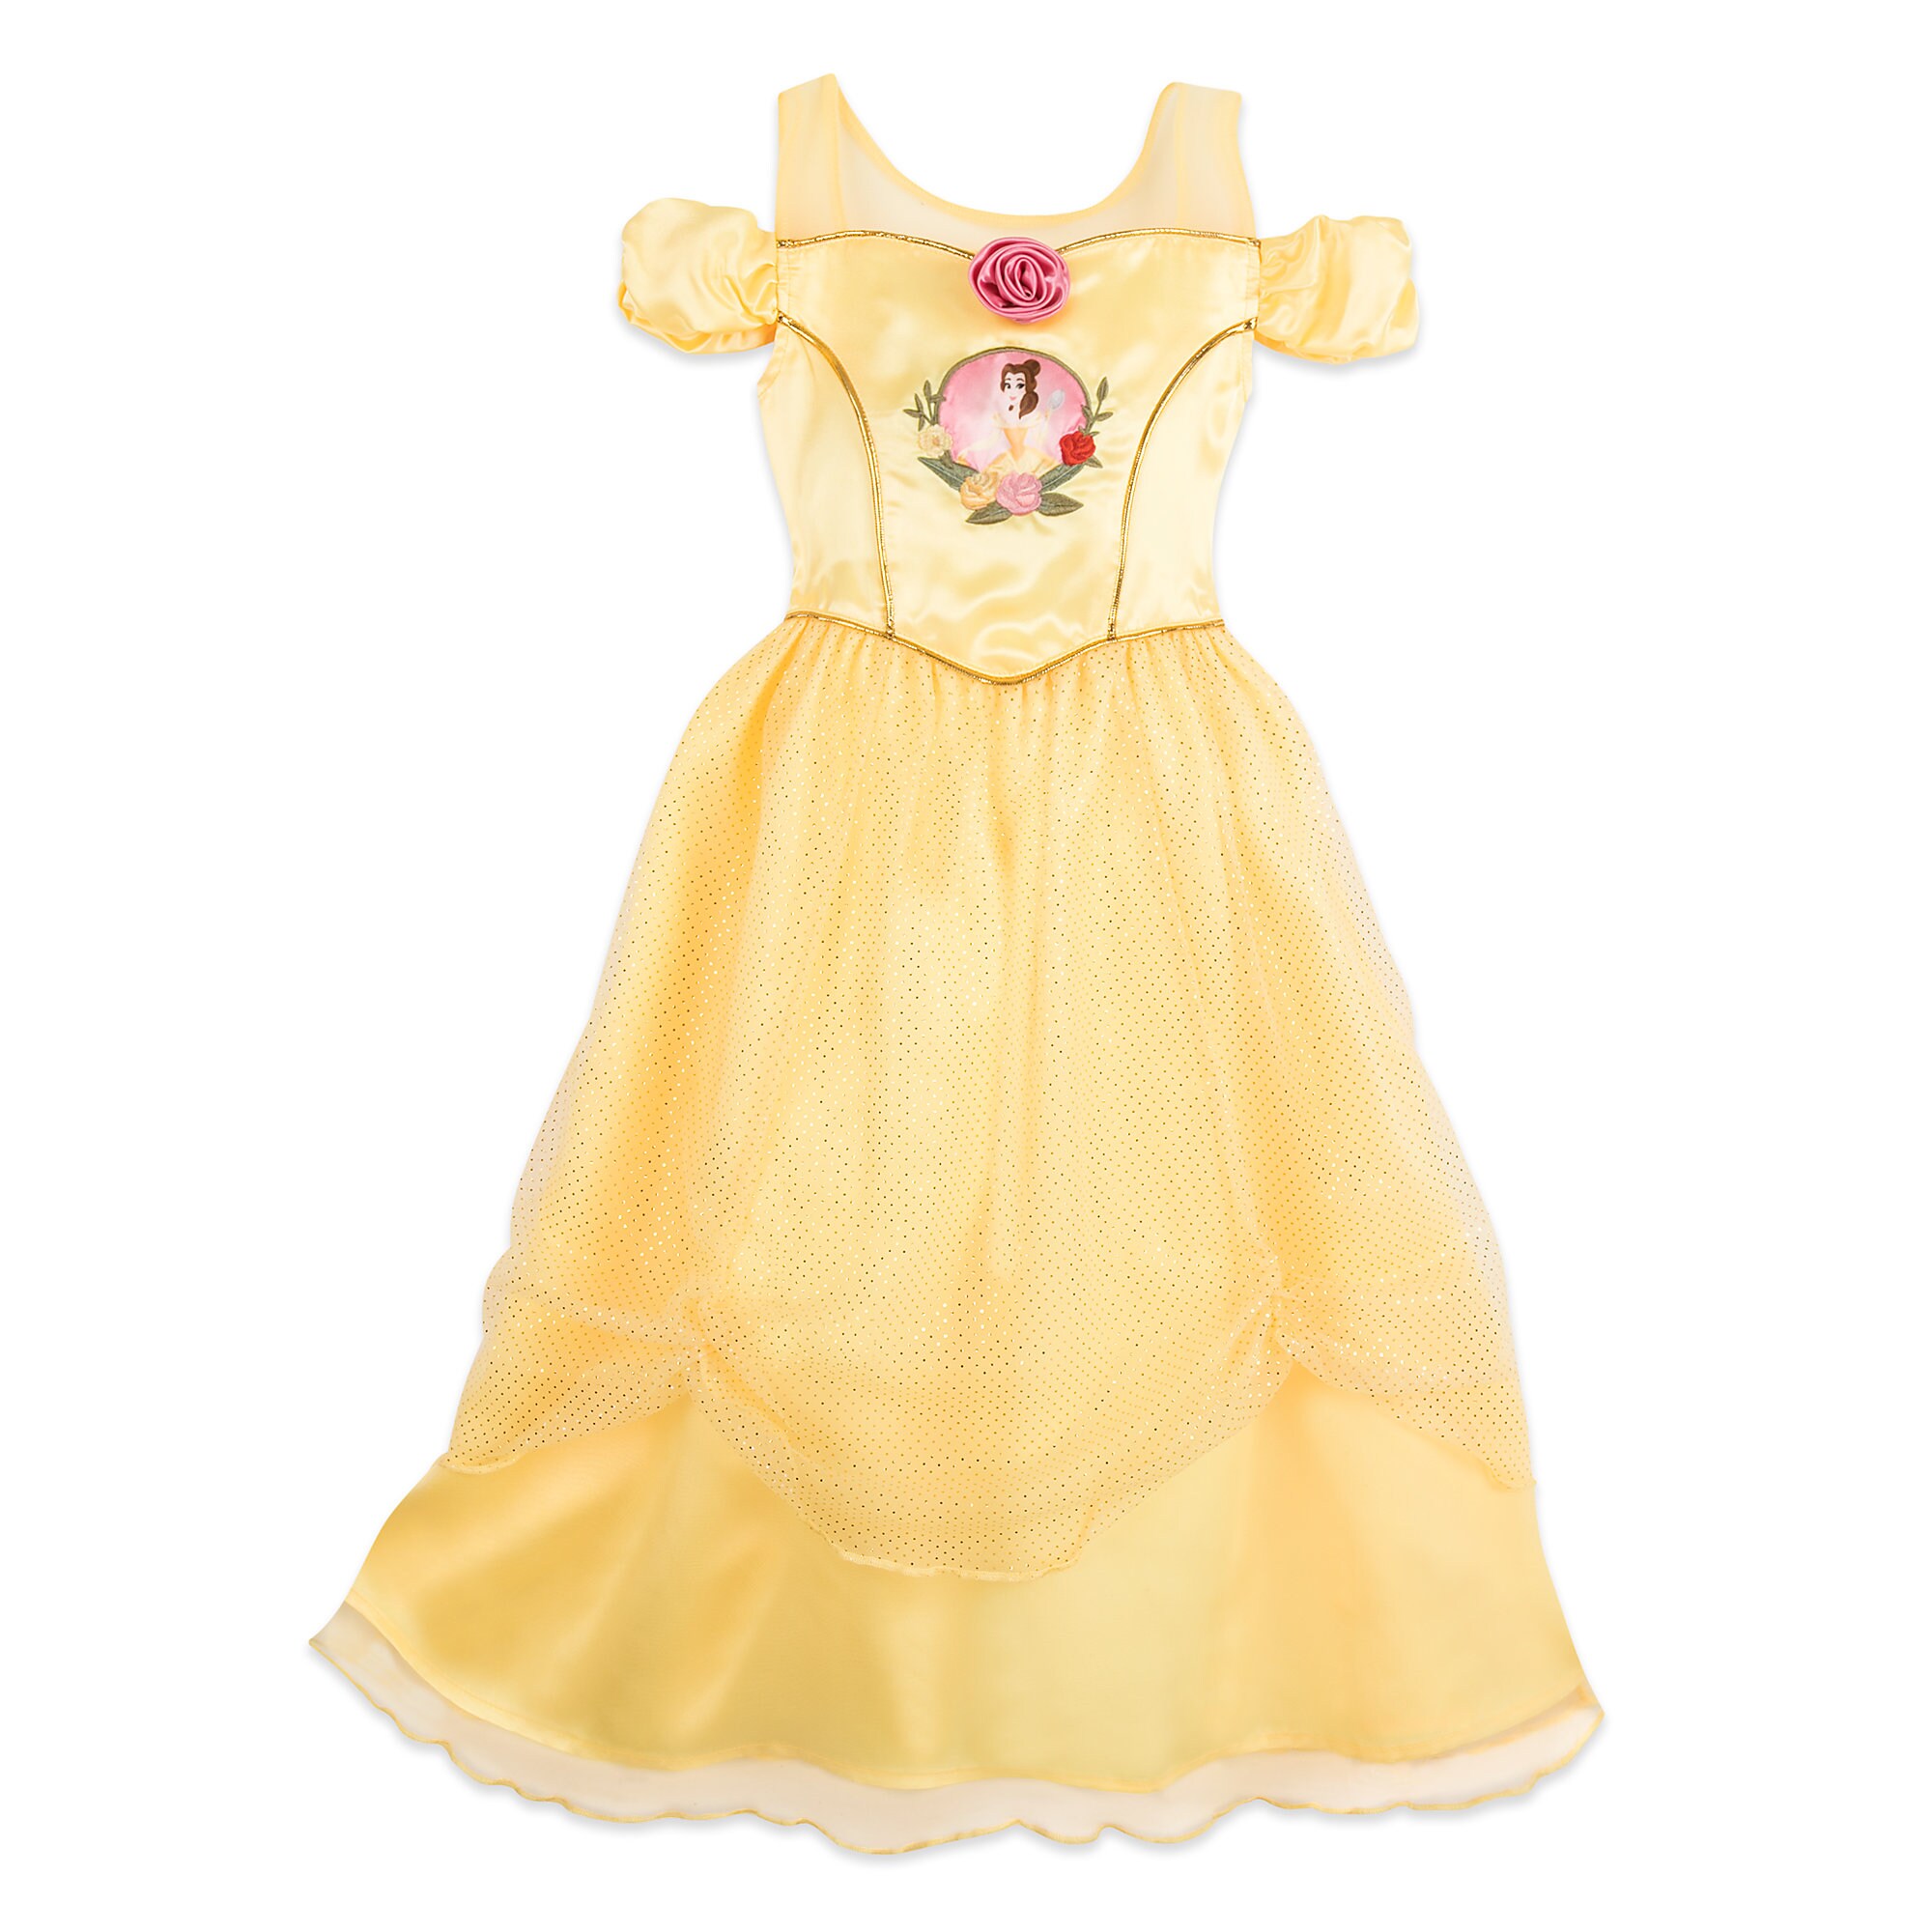 Belle Sleep Gown for Girls